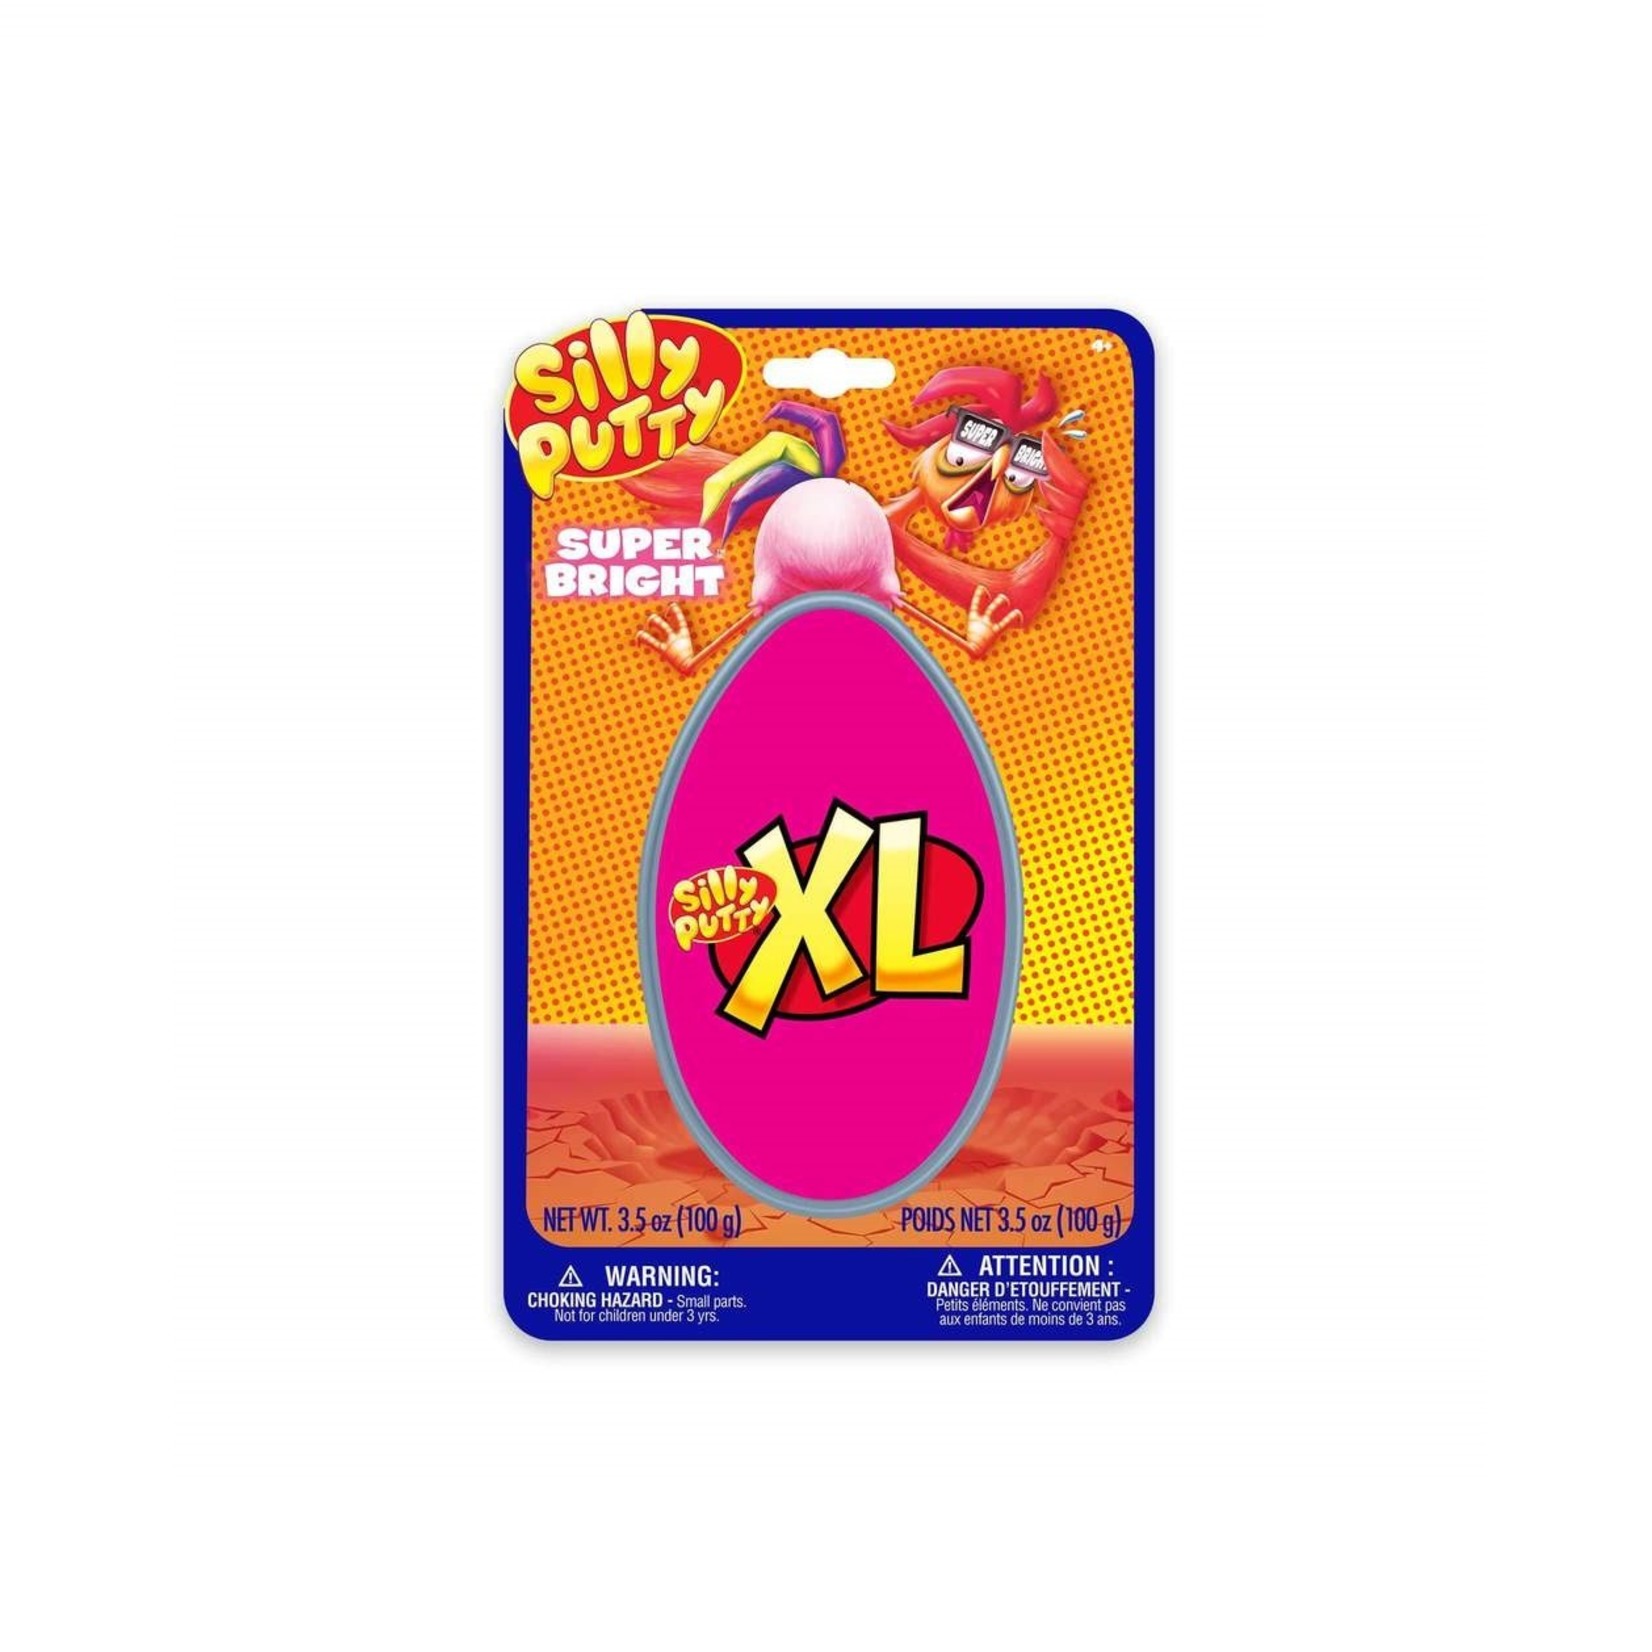 Crayola Silly putty - XL Super bright